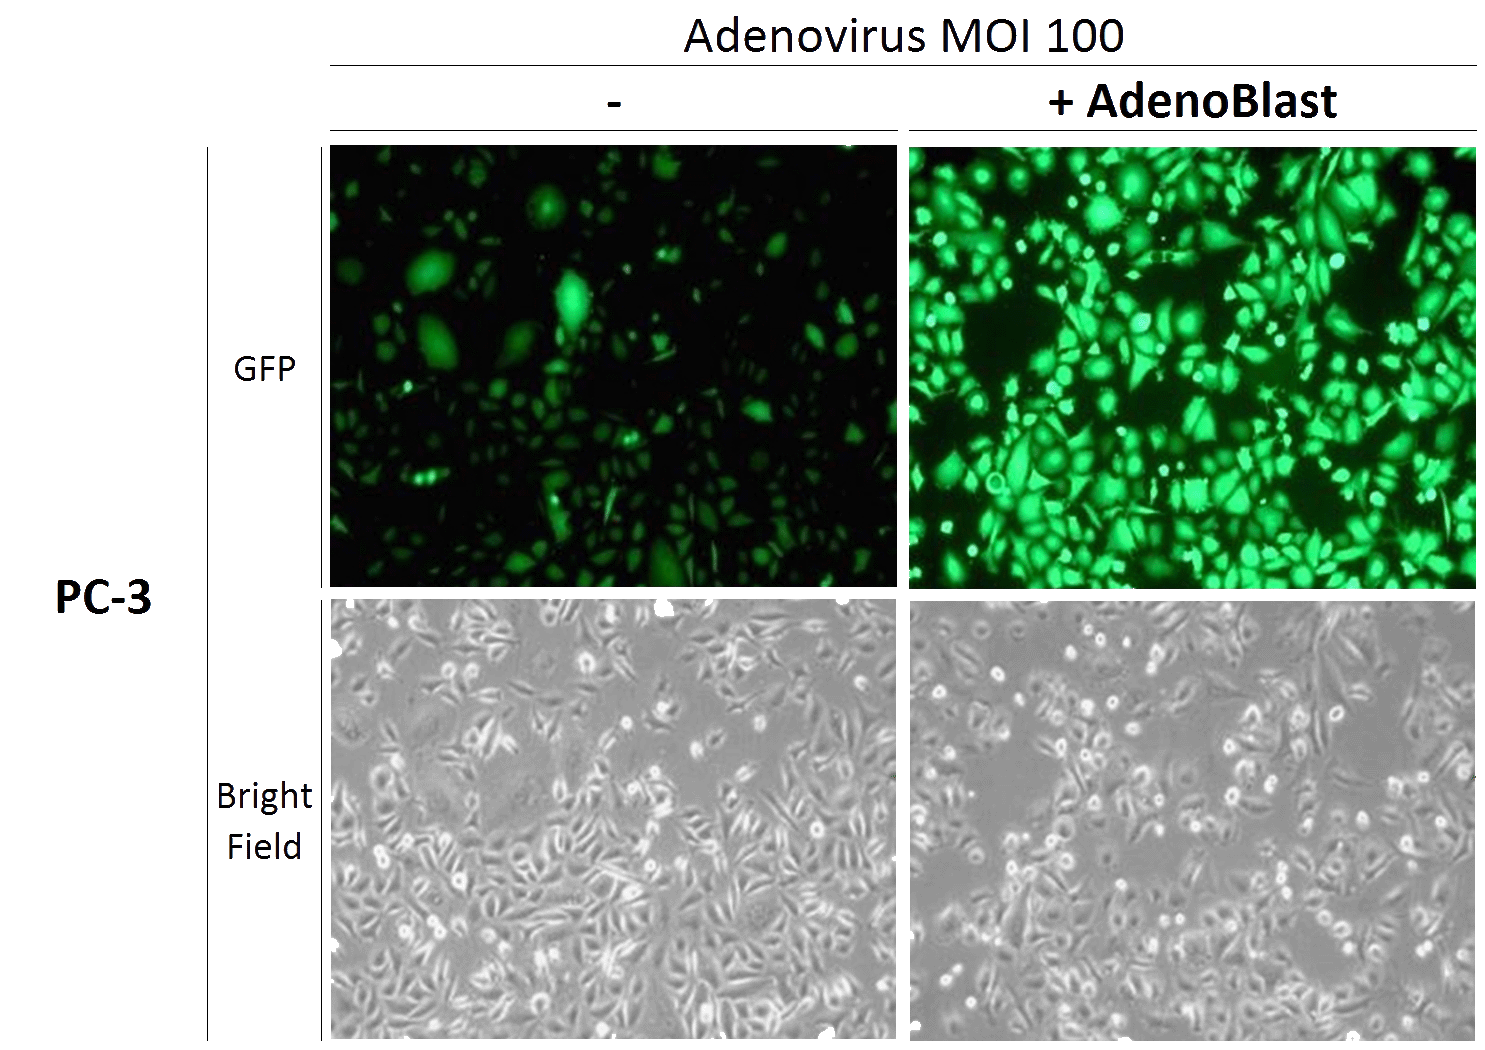 AdenoBlast transduction results